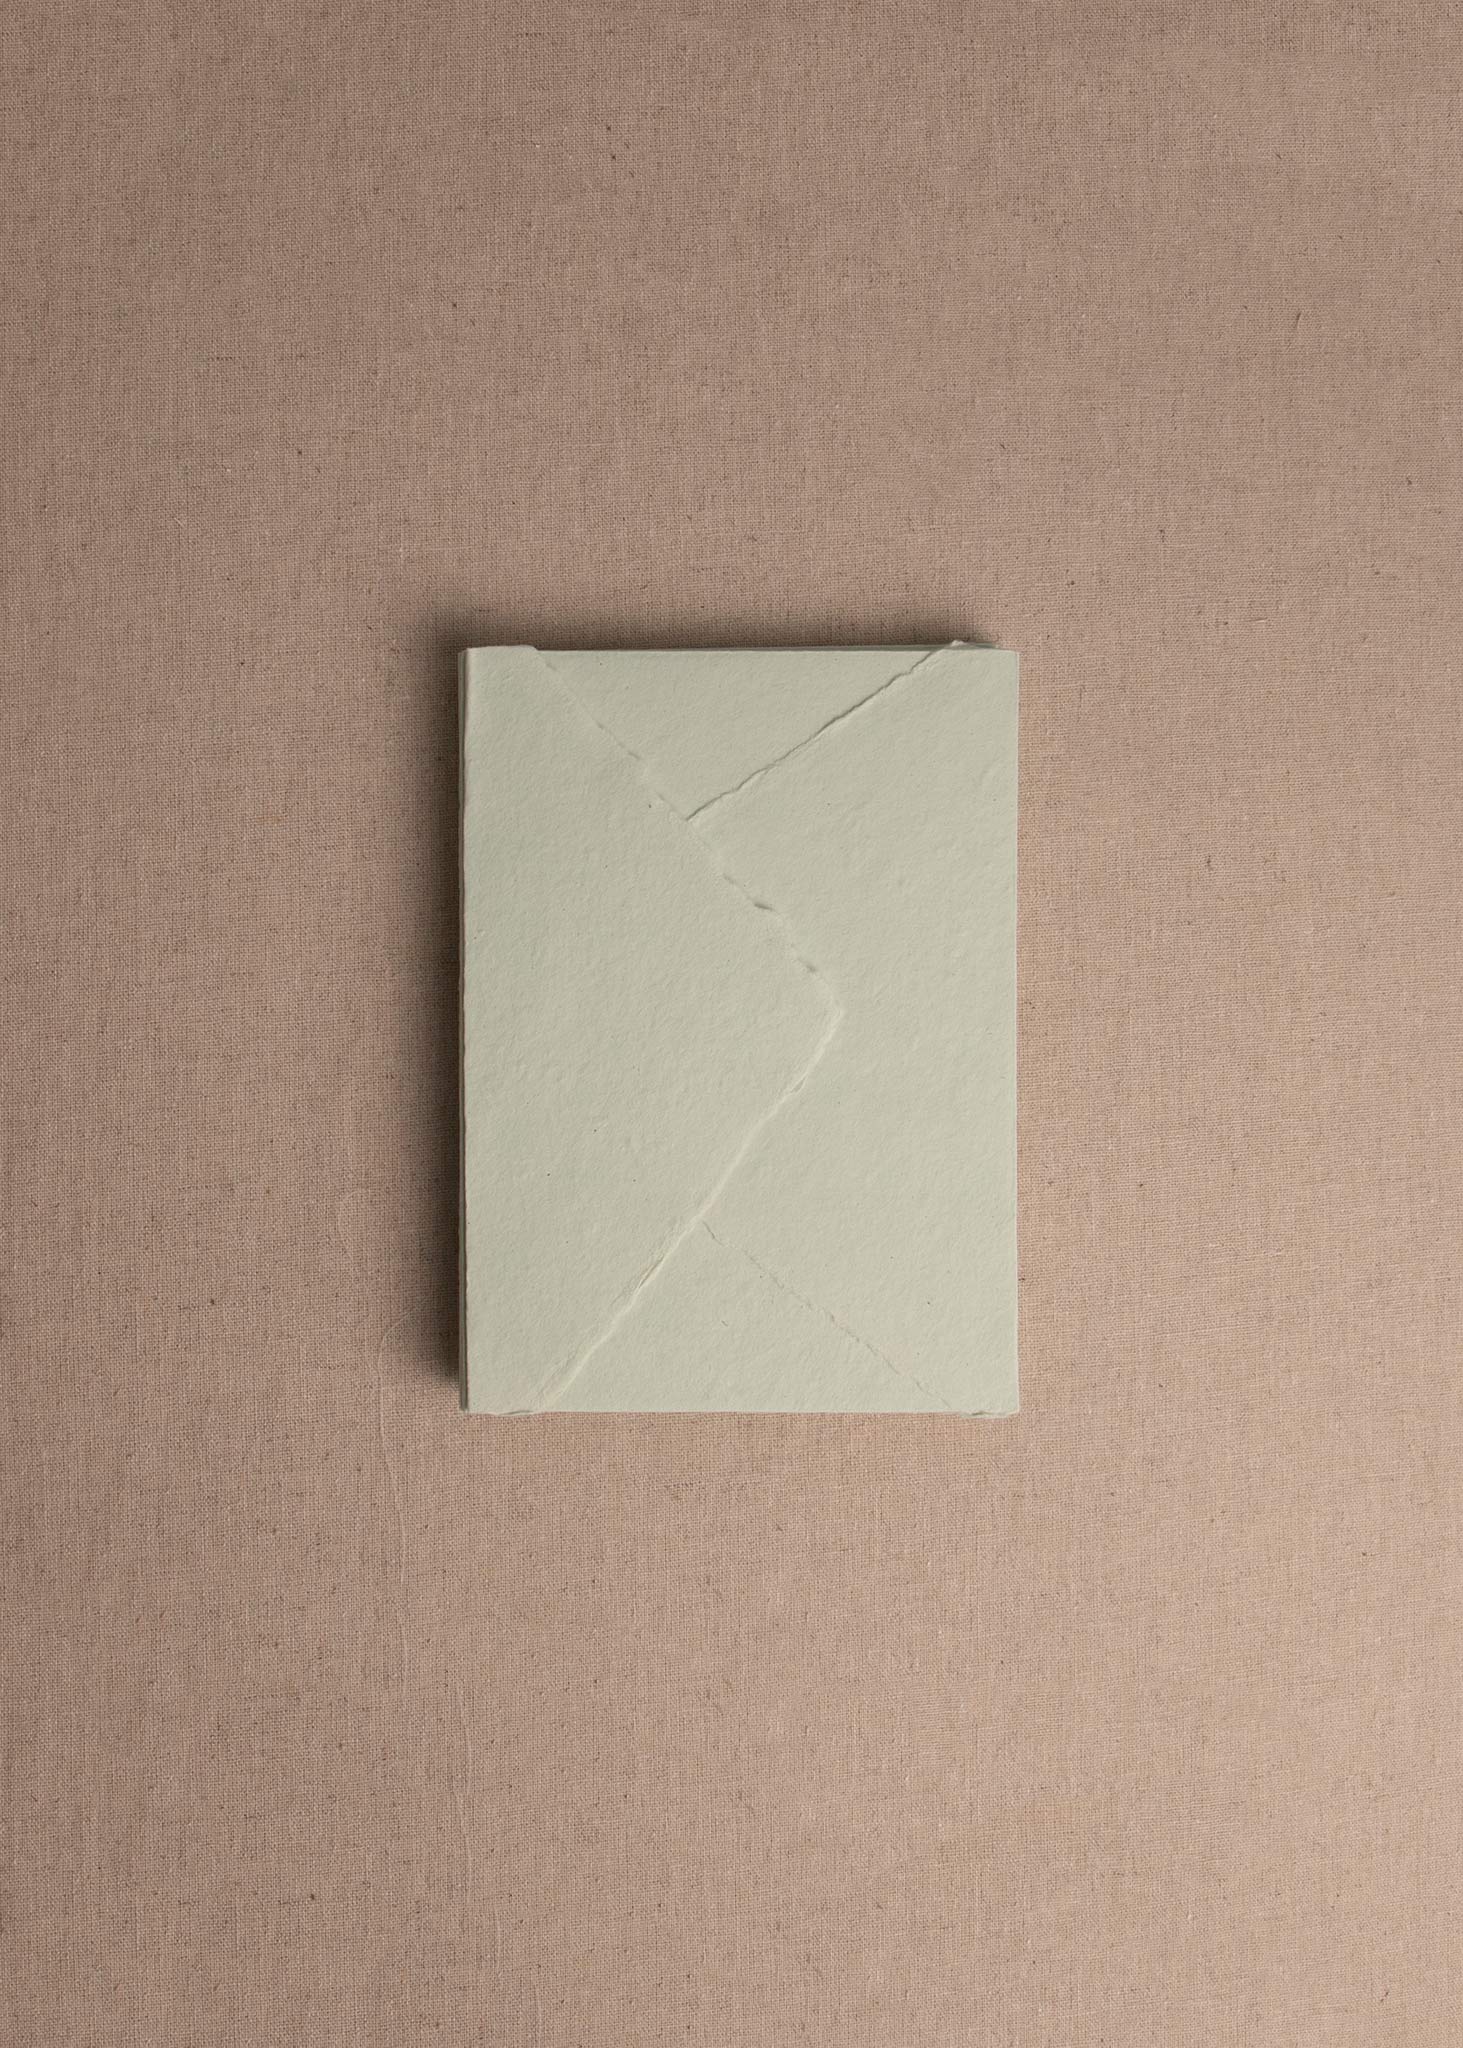 Singular 5x7 Mint Green Handmade paper envelope with deckle edge on linen background